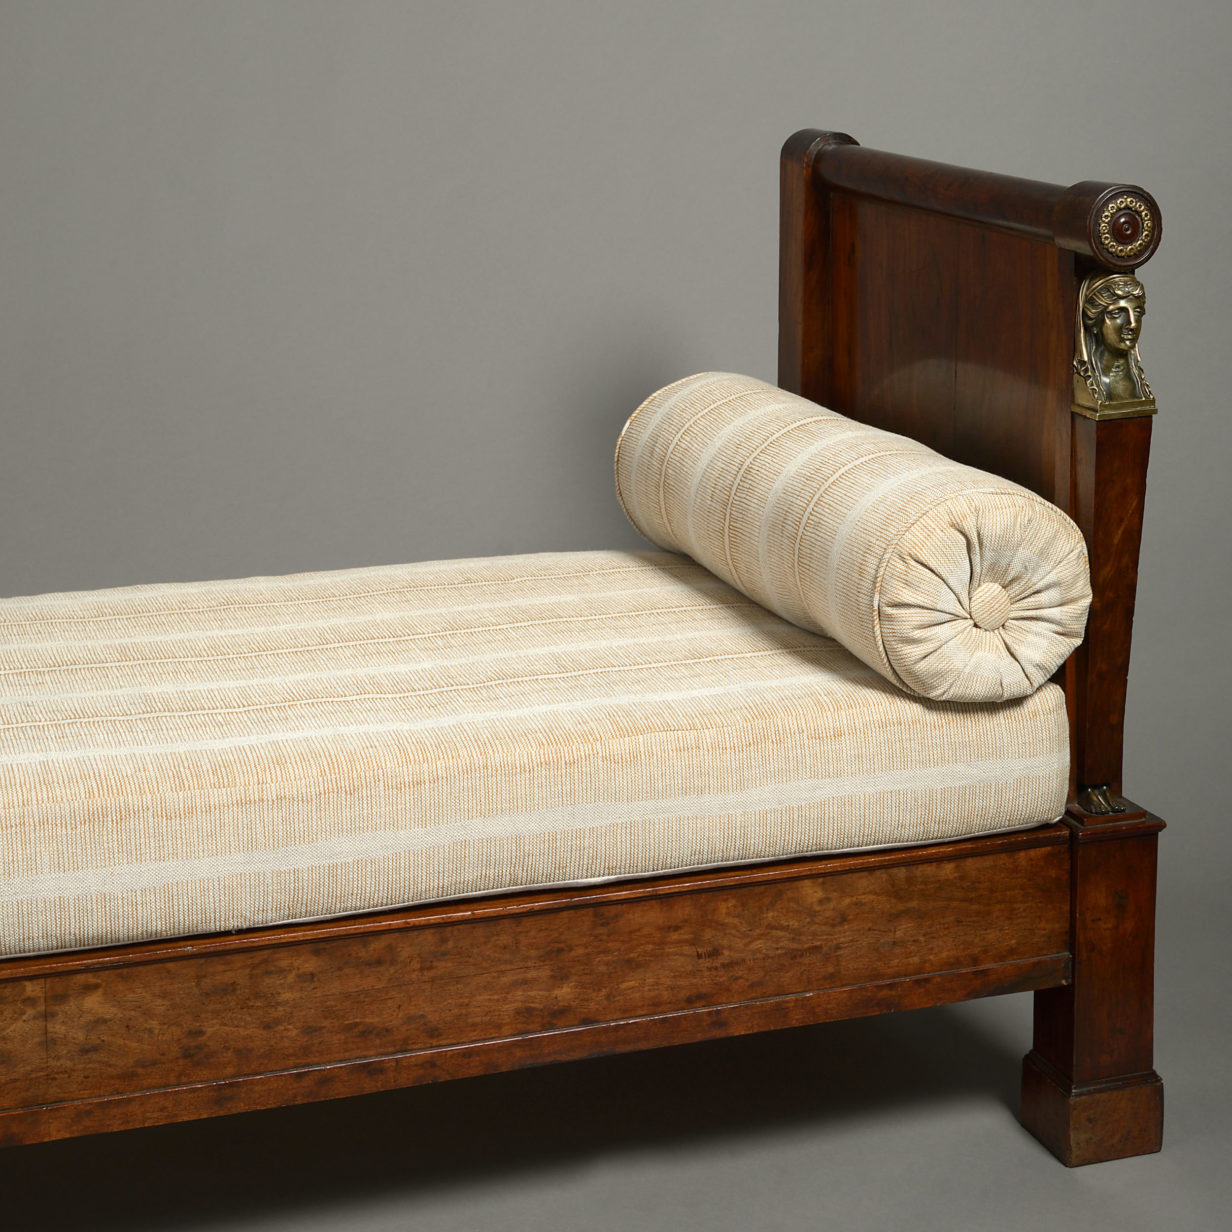 An Early 19th Century Empire Period Mahogany Day Bed